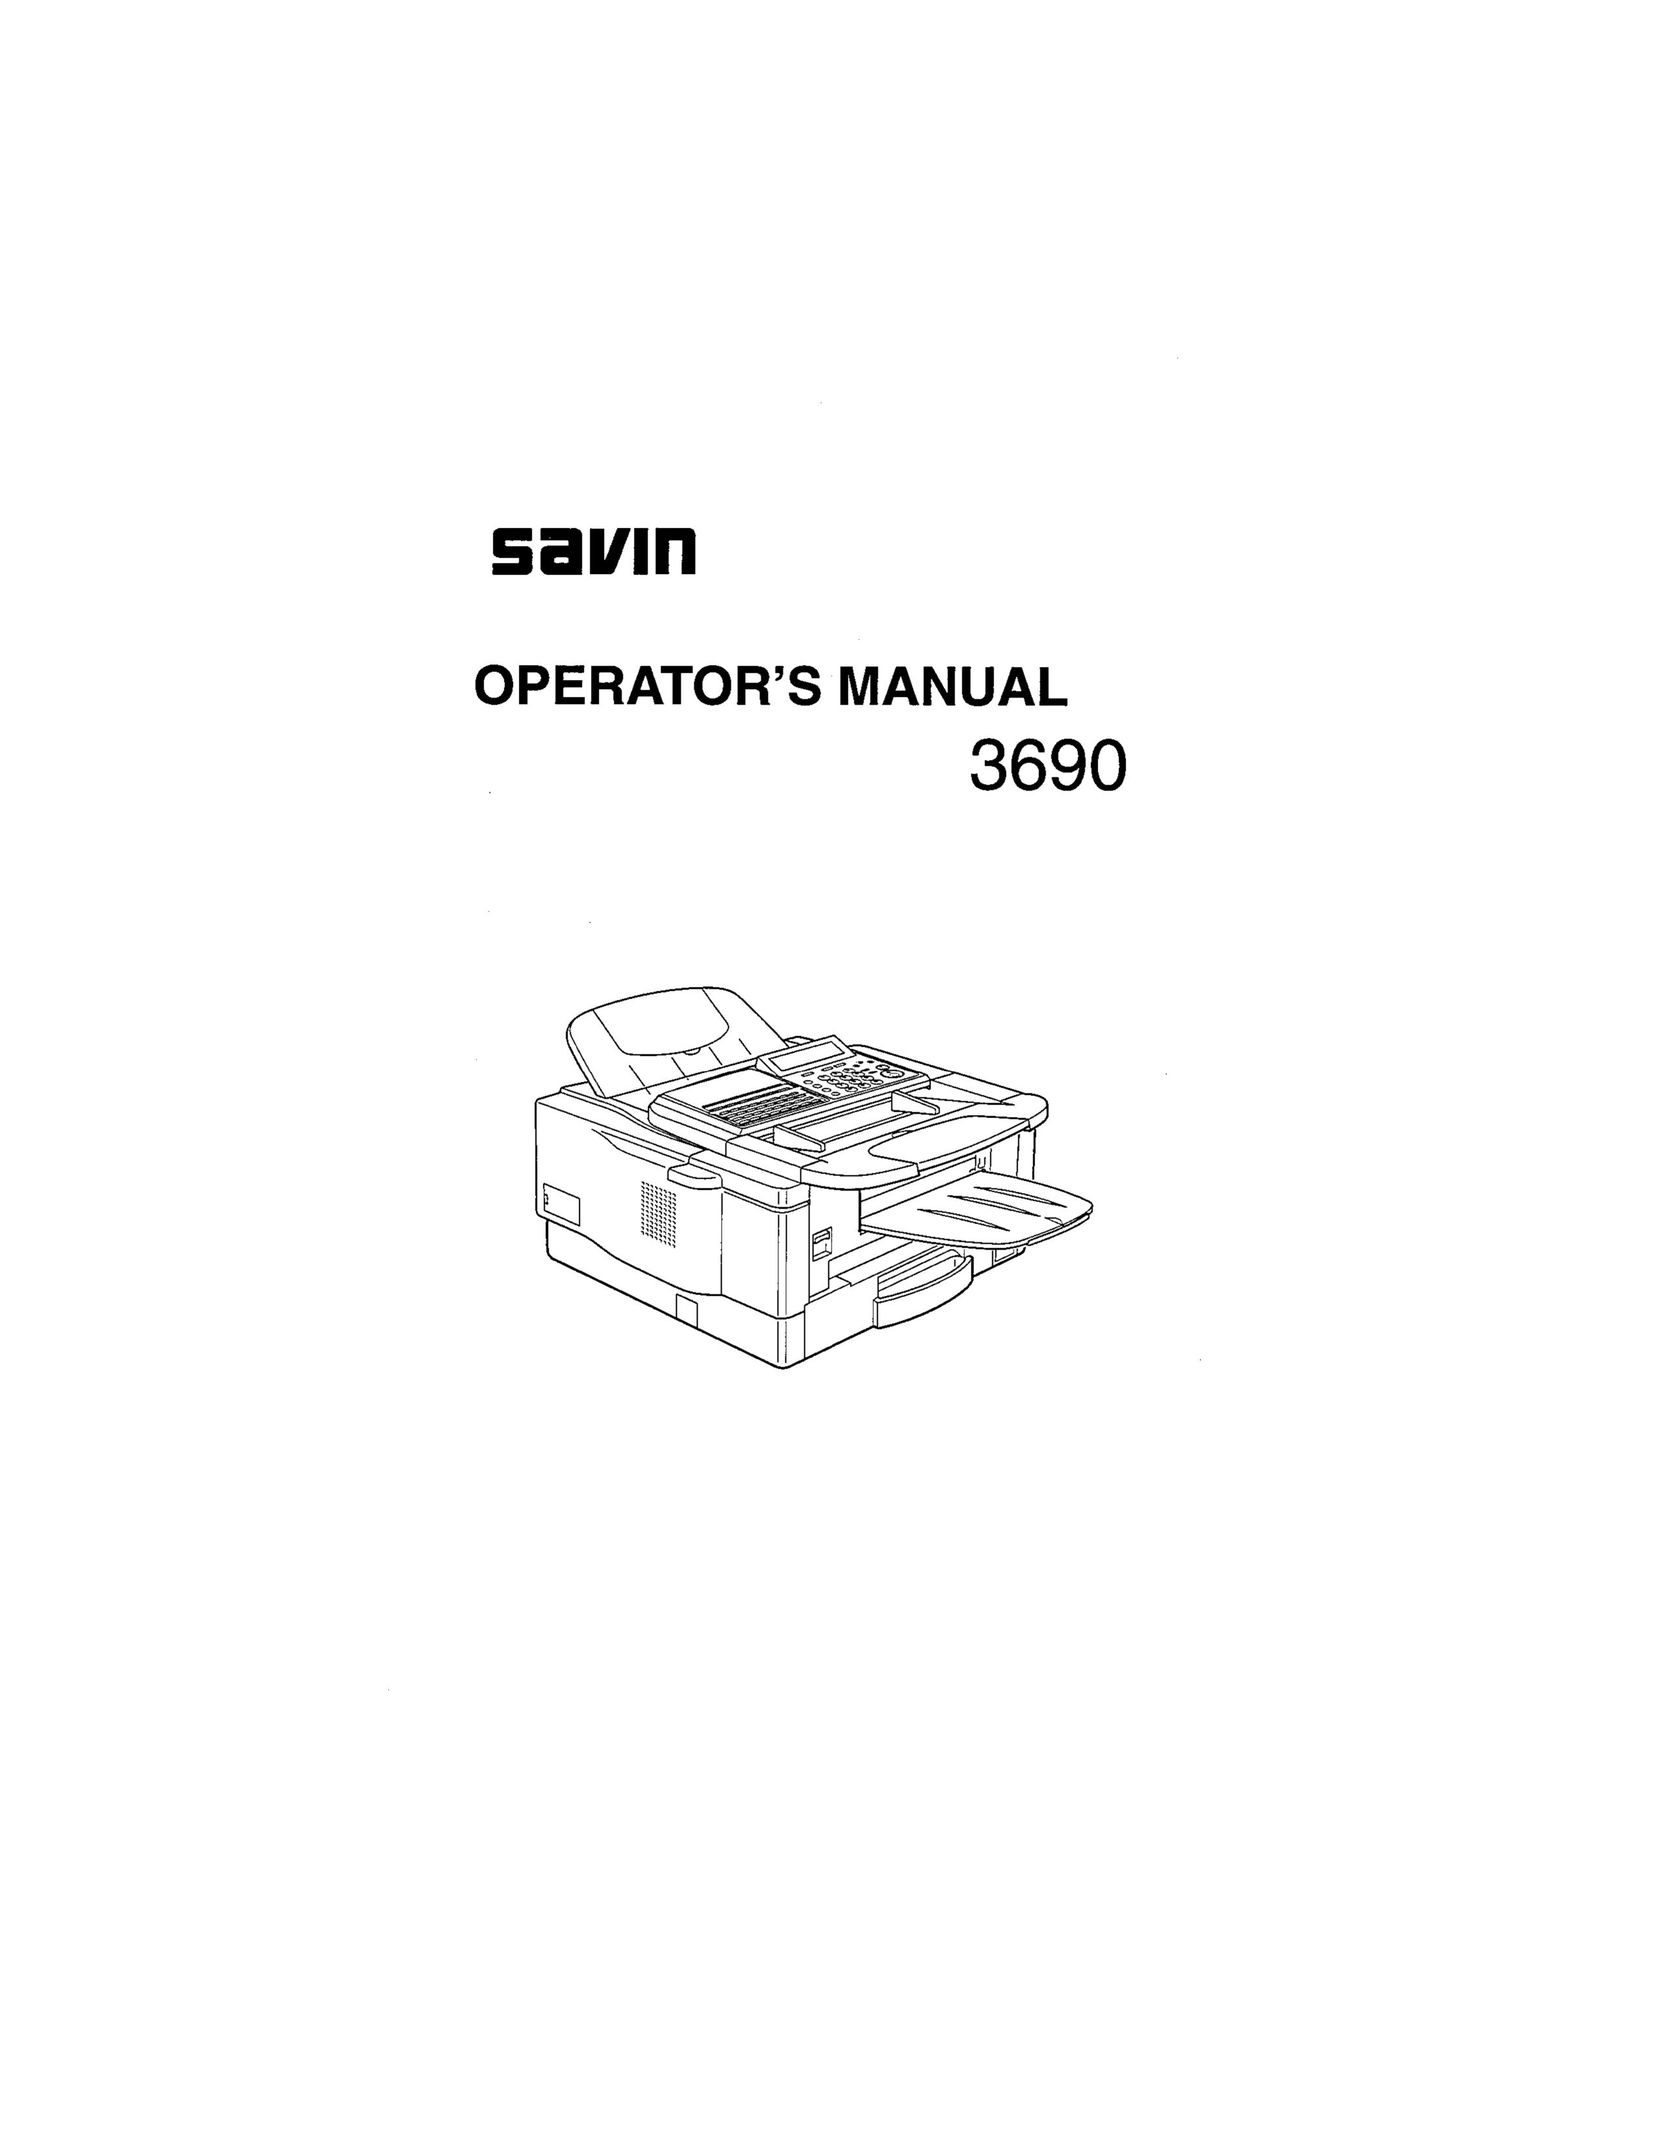 Savin 3690 All in One Printer User Manual